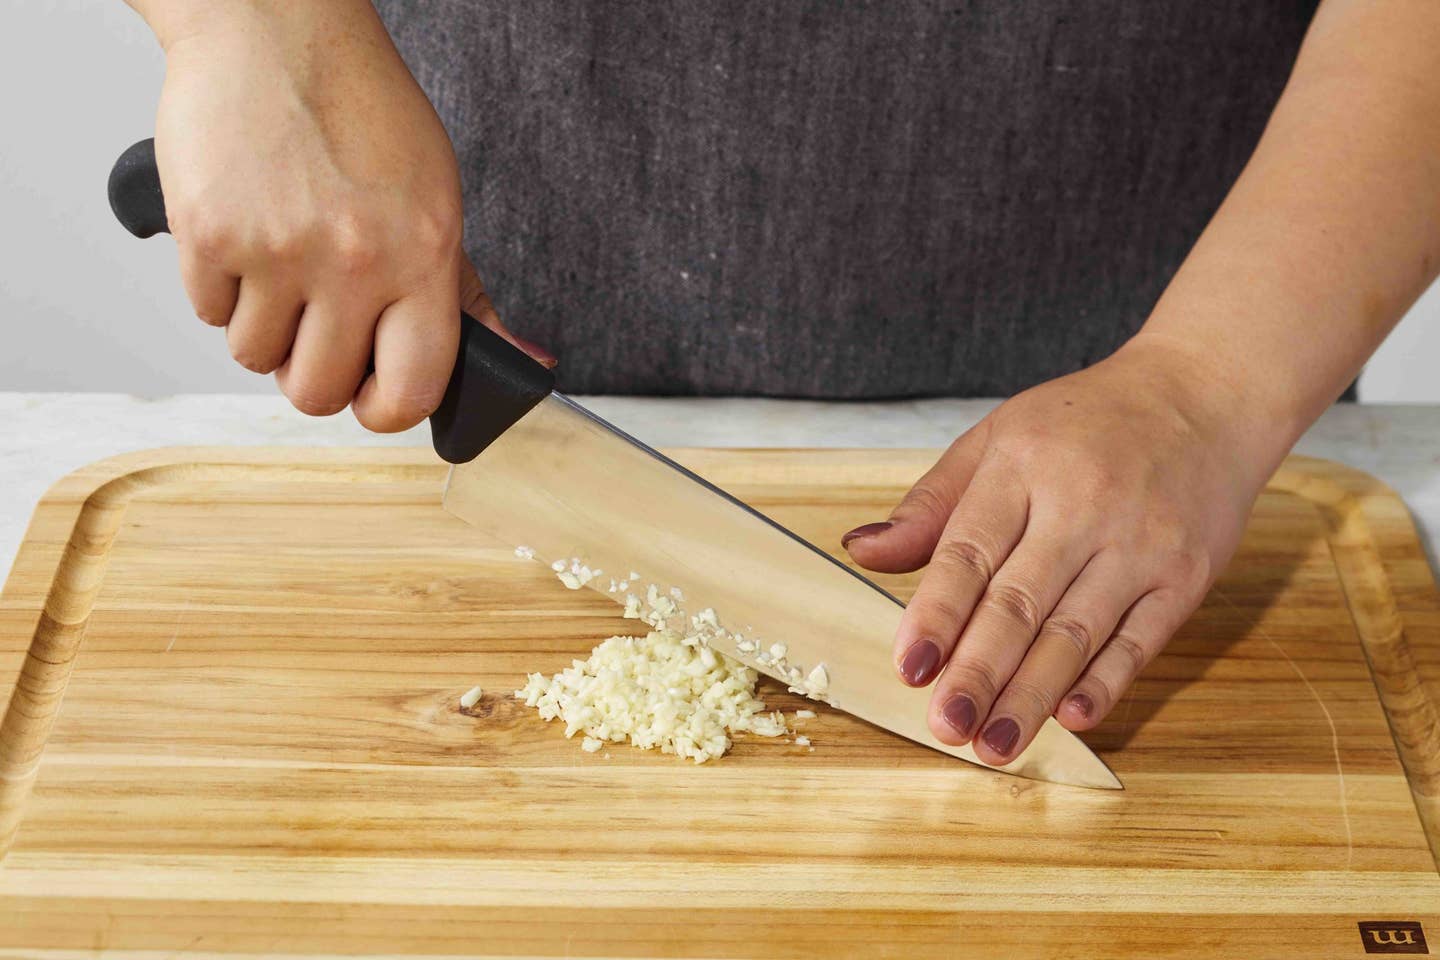 Knife Skills: The Most Important Kitchen Skill